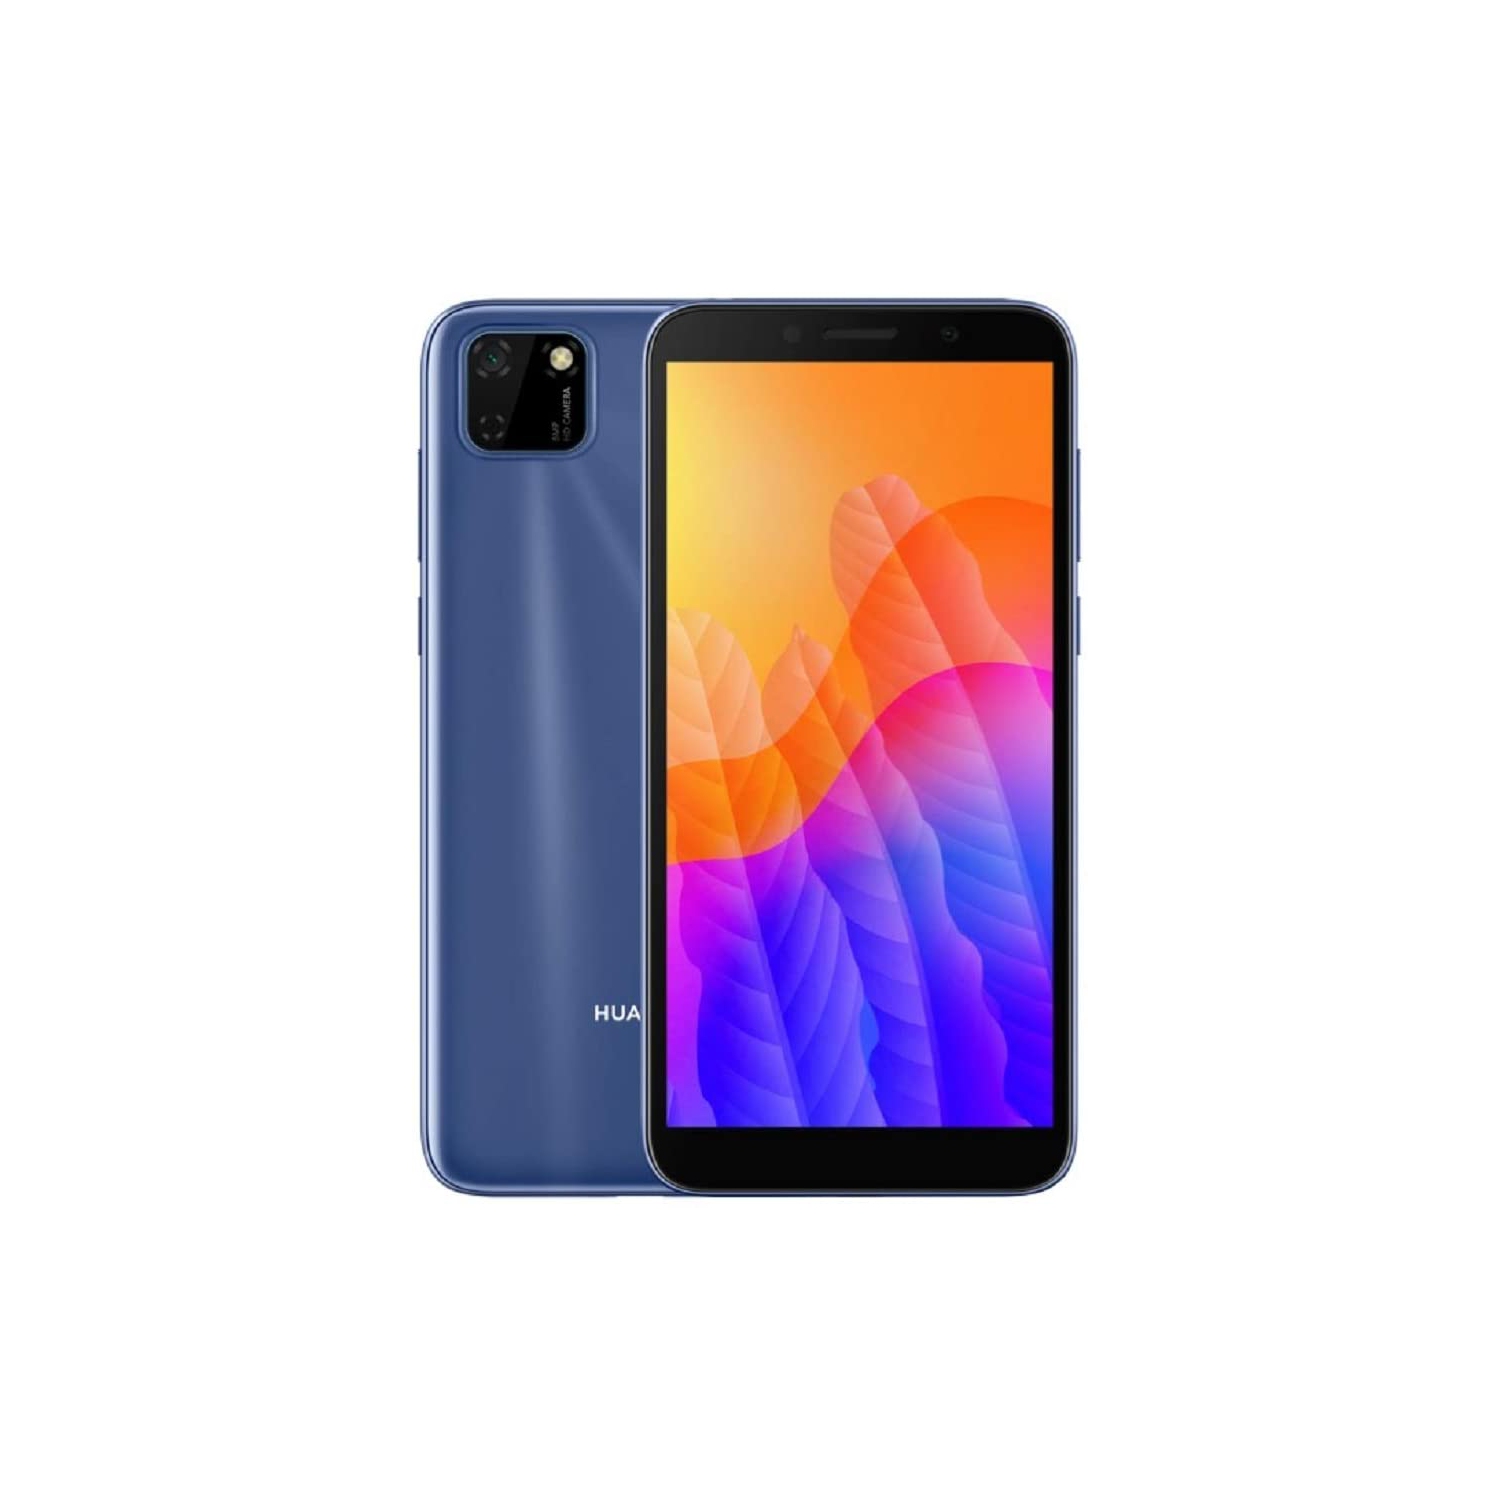 Huawei Y5p 32GB/2GB RAM - Dual SIM Unlocked Smartphone - International Model - Phantom Blue - Brand New